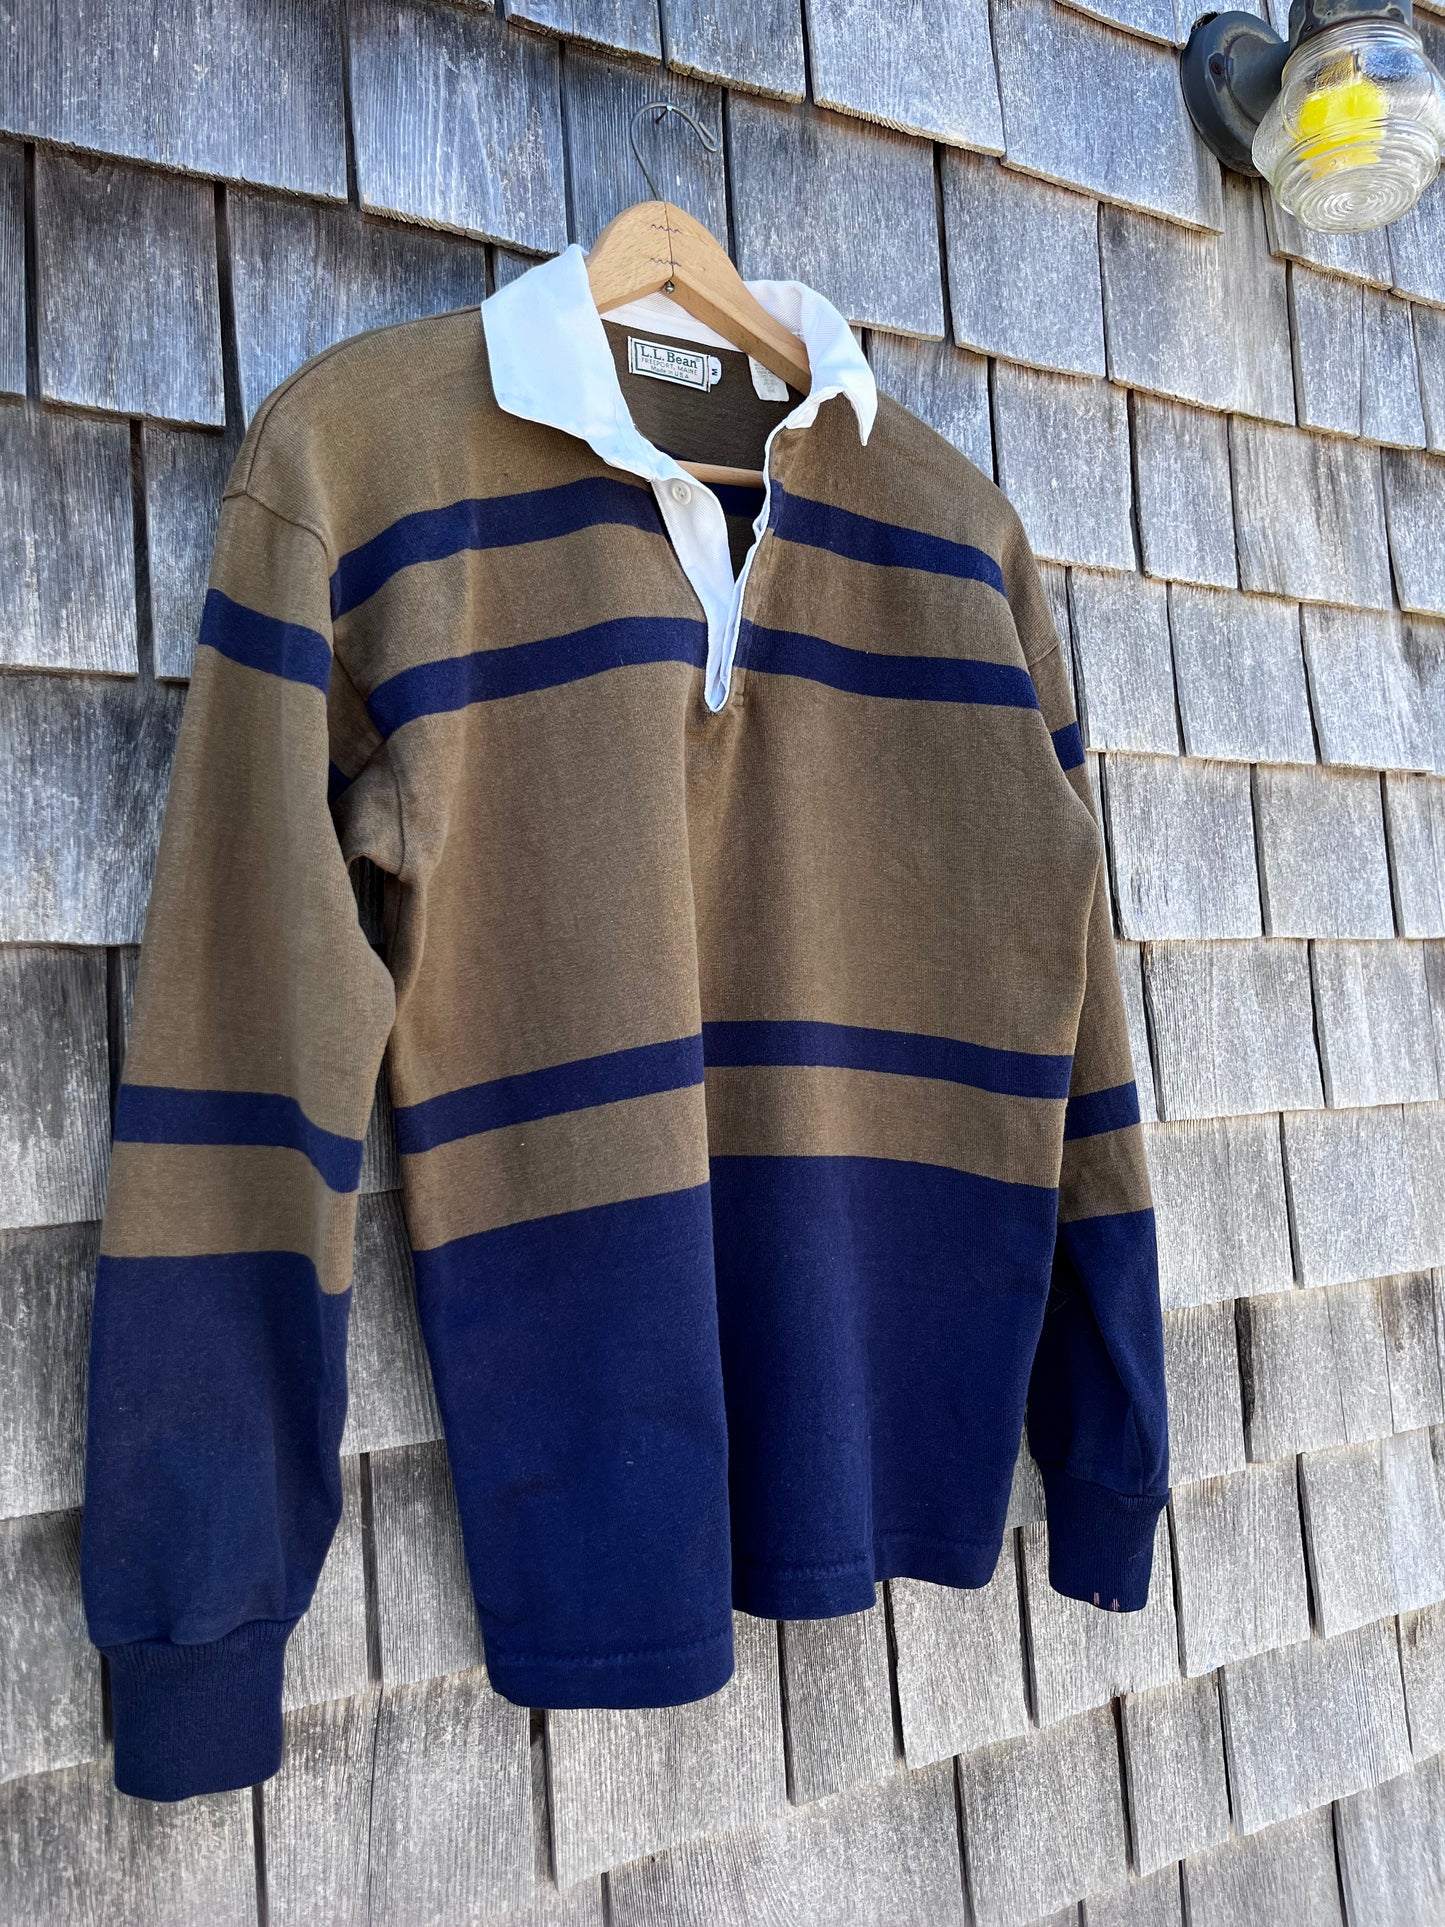 90s L.L. Bean Rugby Shirt OD Green/Navy Medium/Large